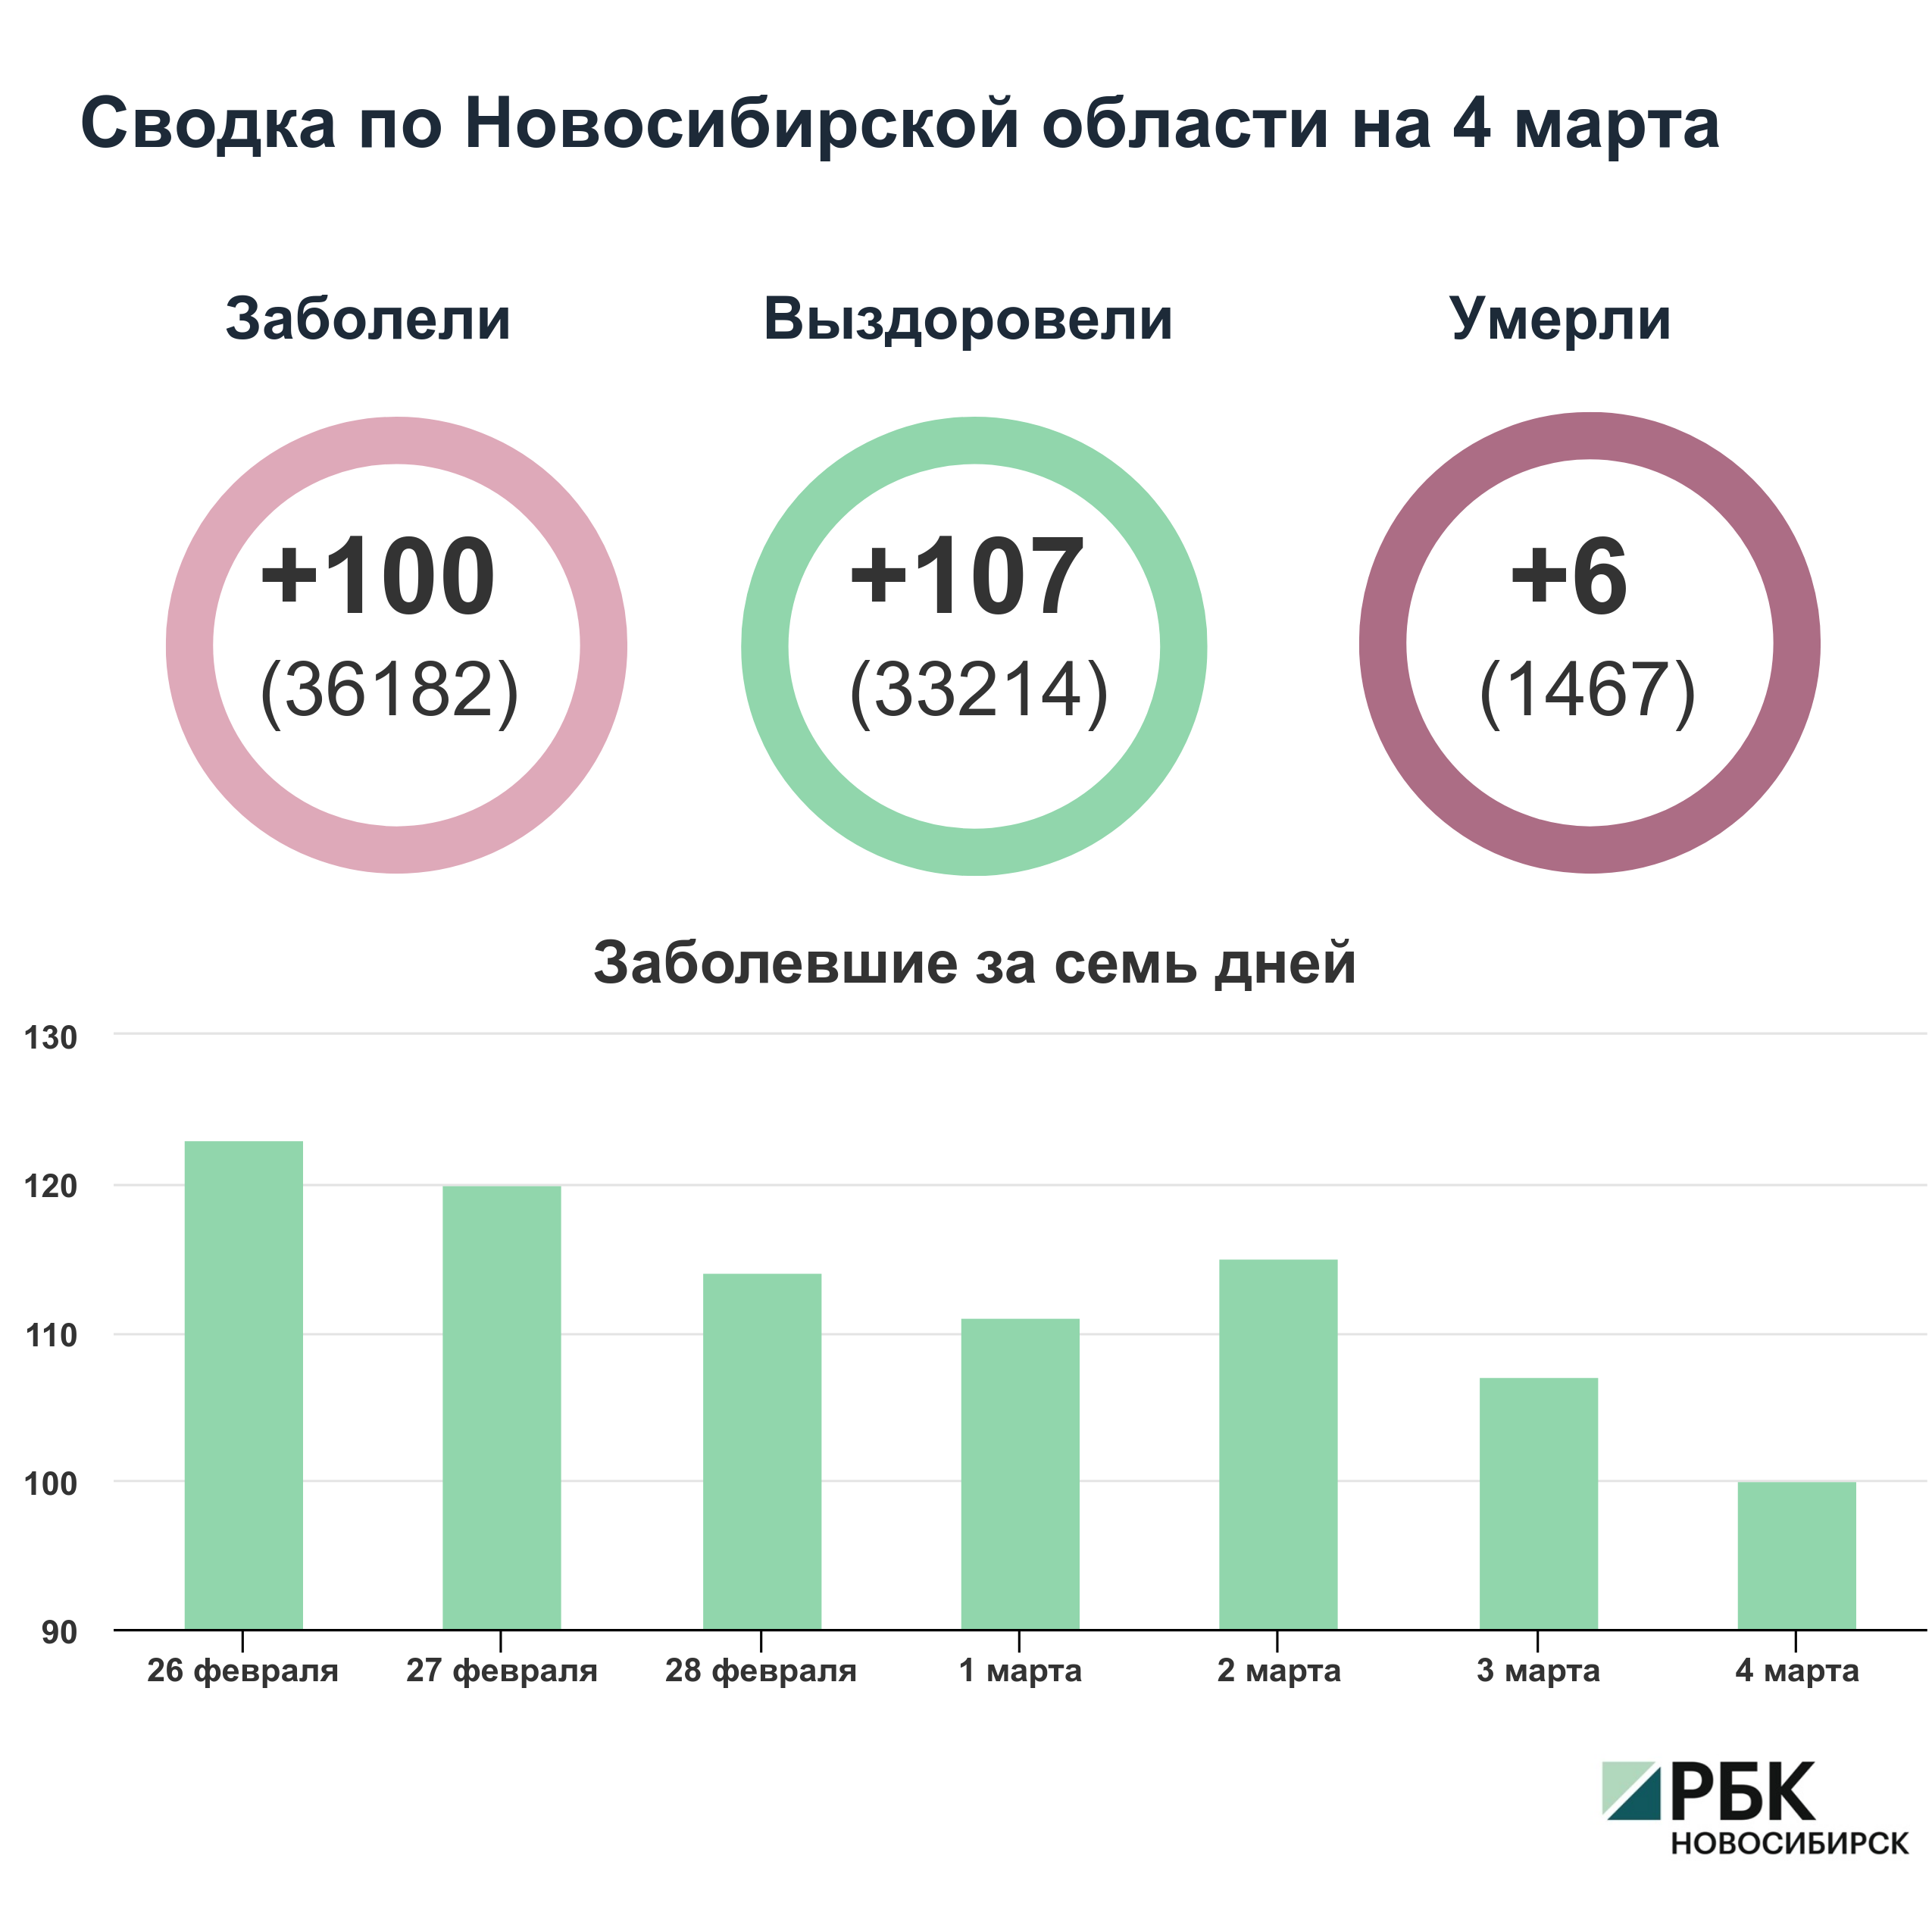 Коронавирус в Новосибирске: сводка на 4 марта